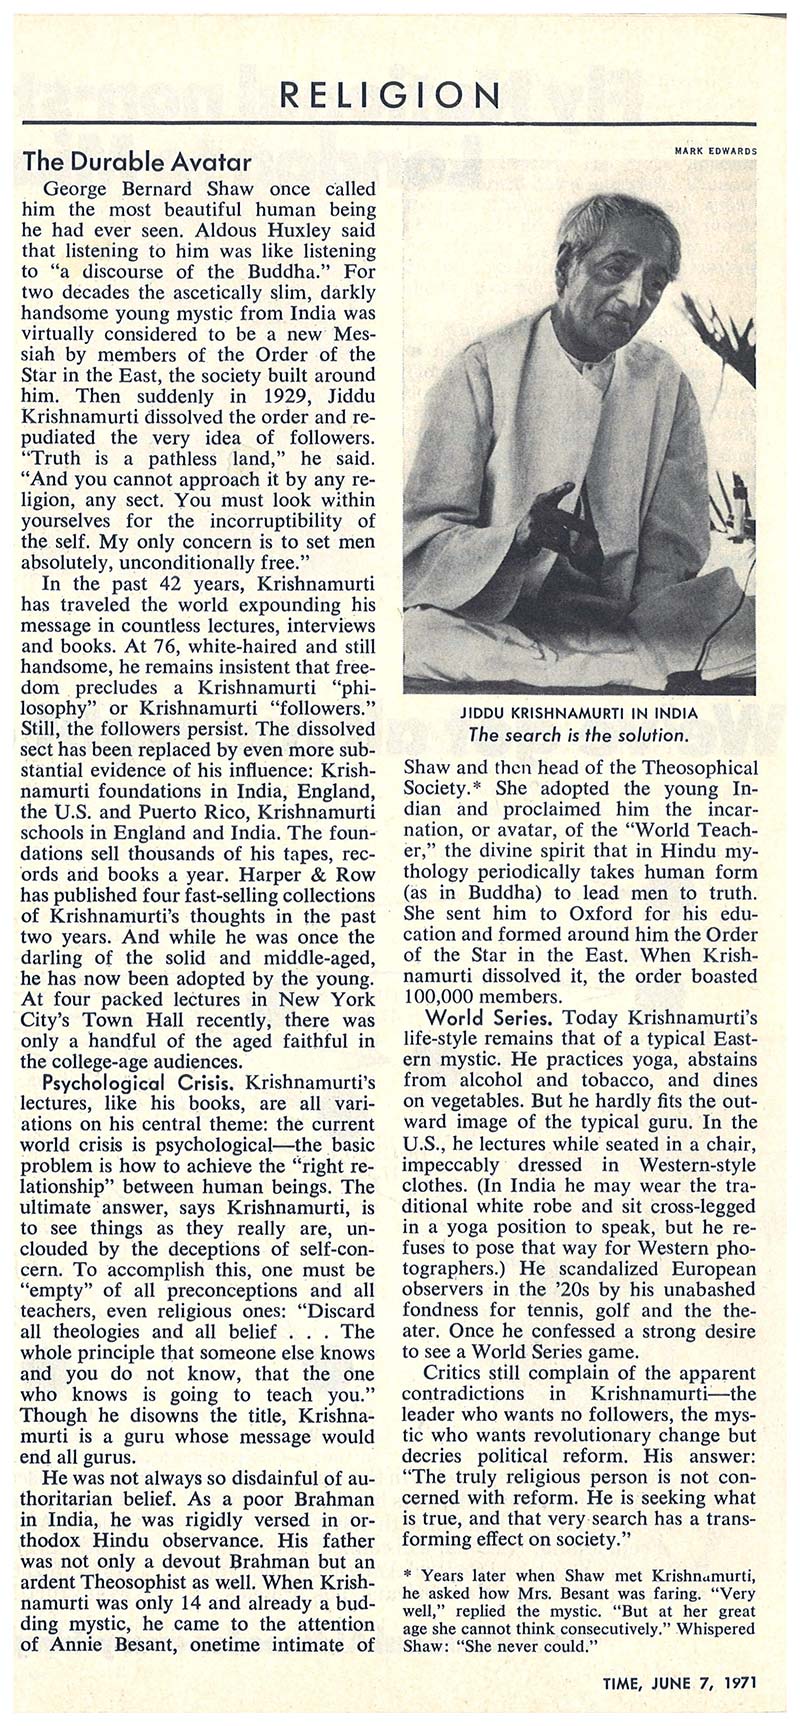 1971 Time Magazine - The Durable Avatar